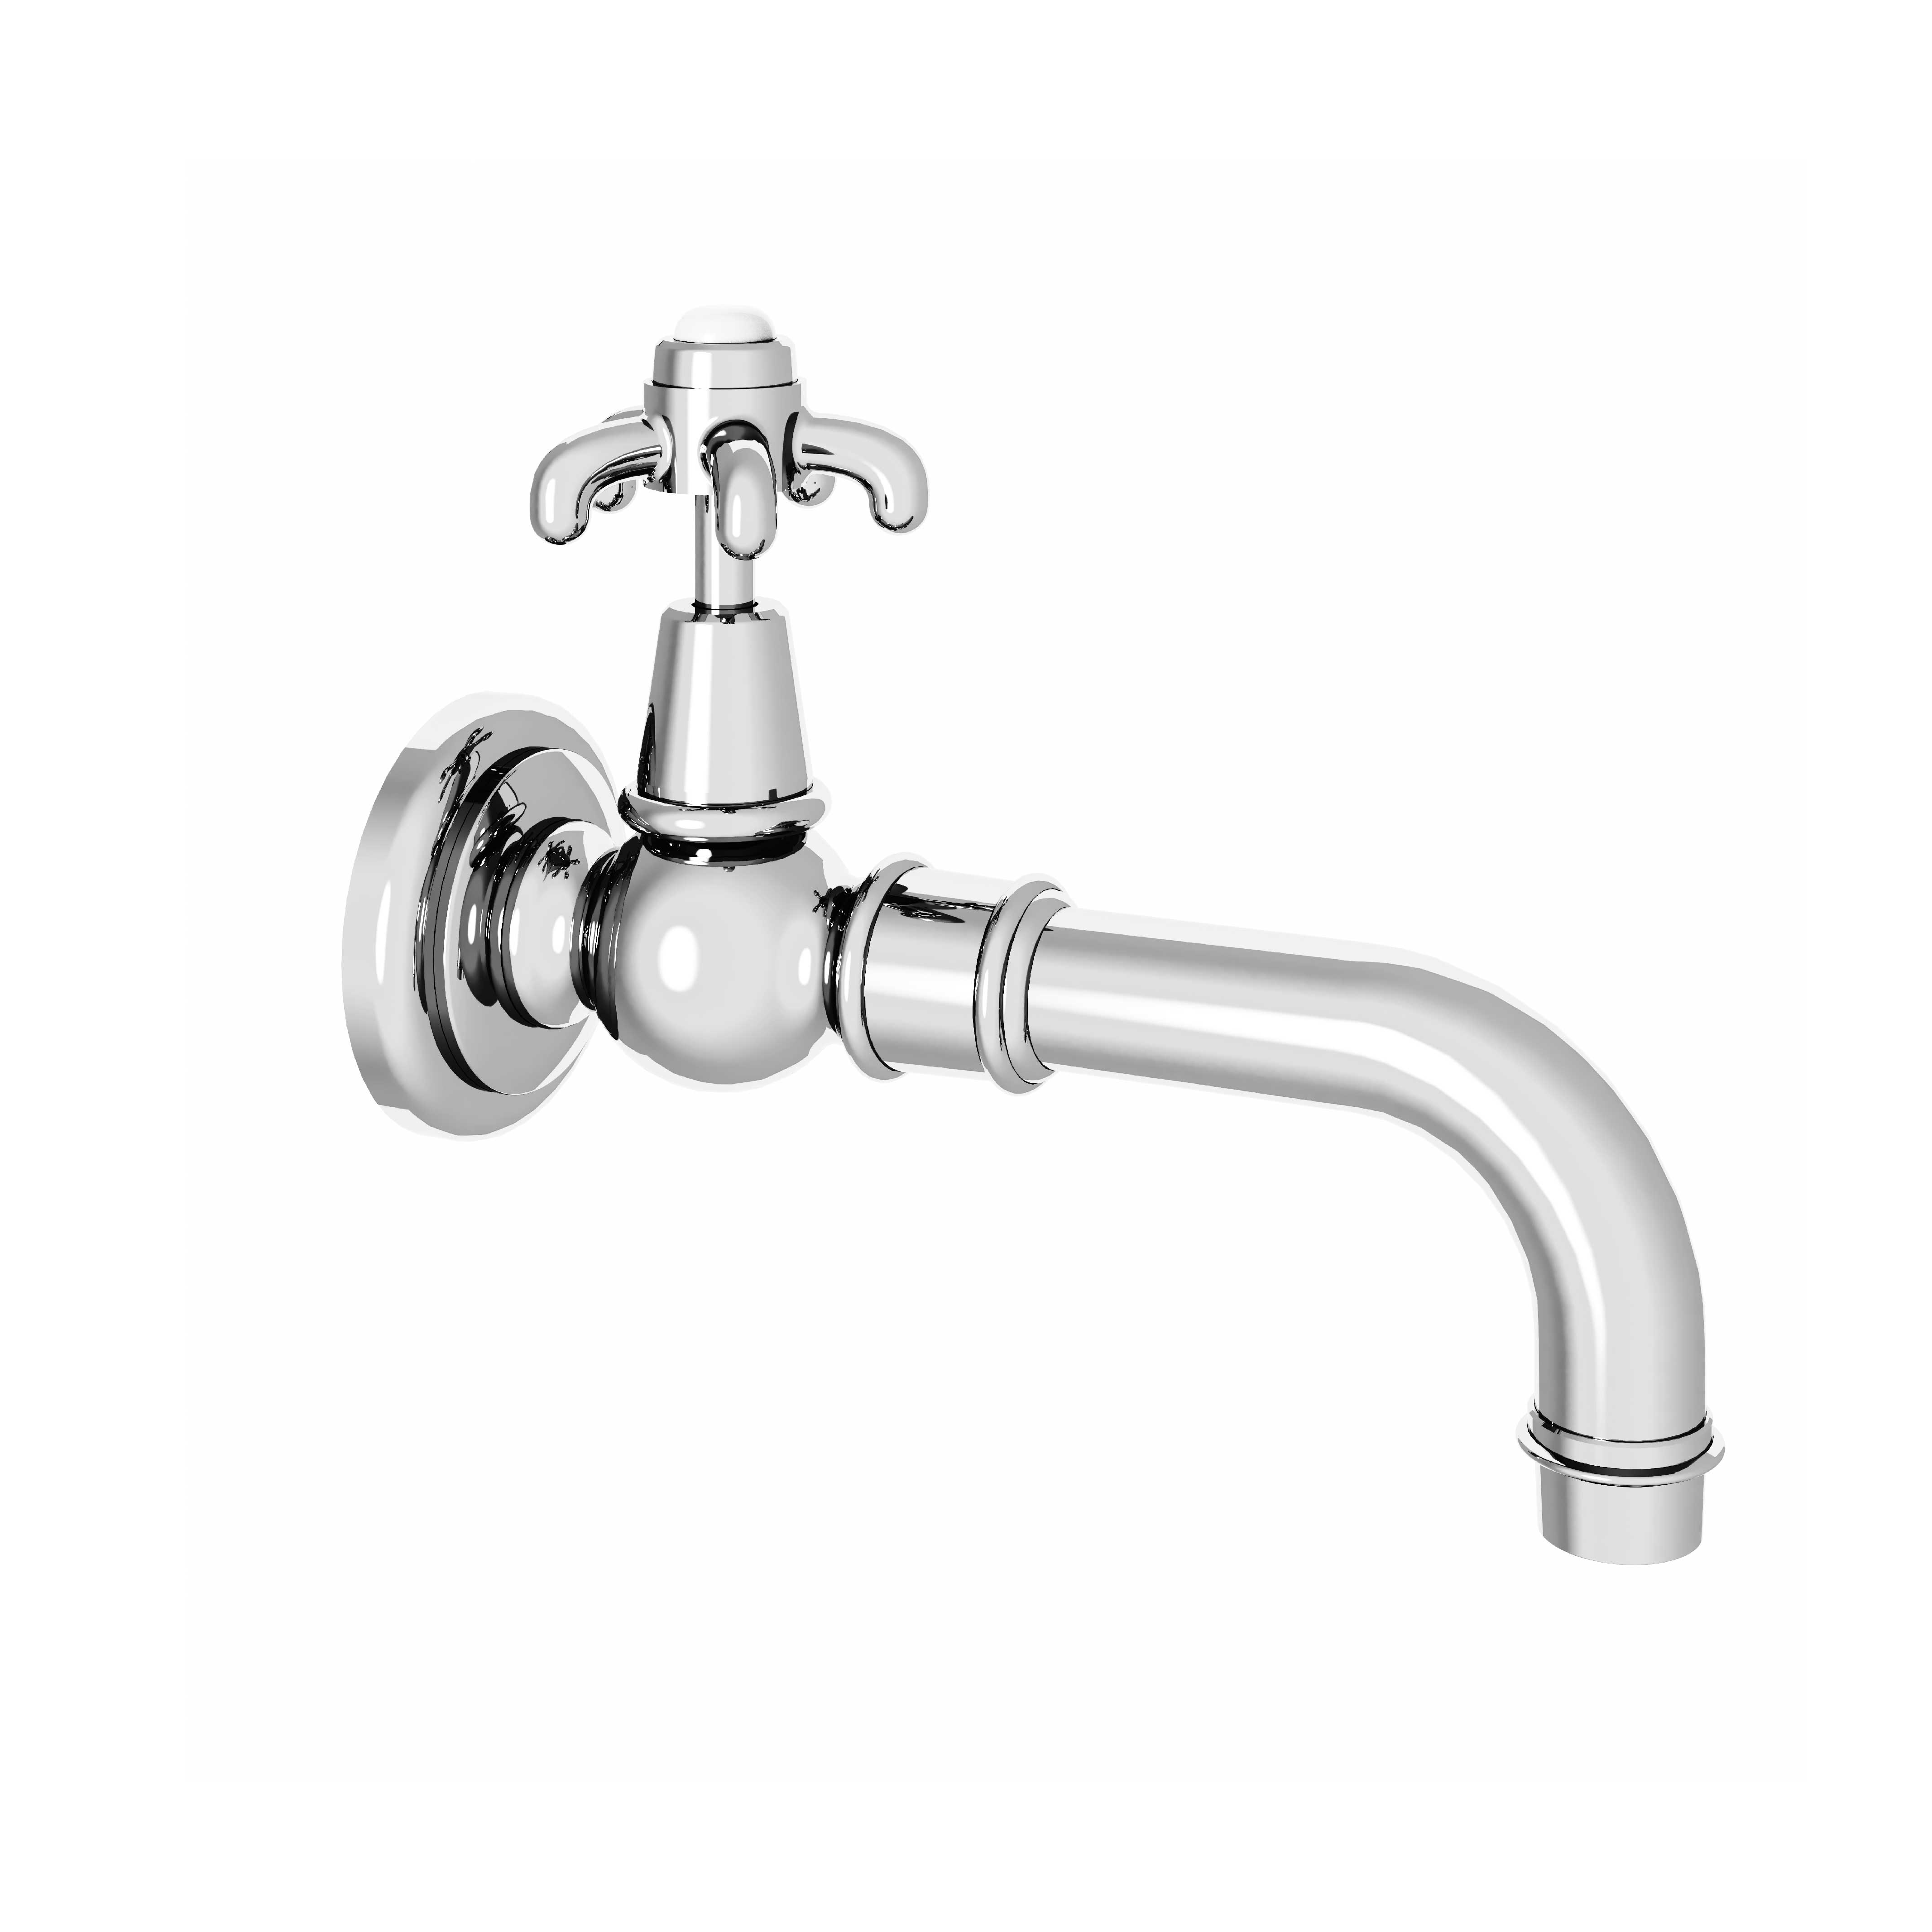 M01-4WS1 Wall mounted wash-hand basin tap